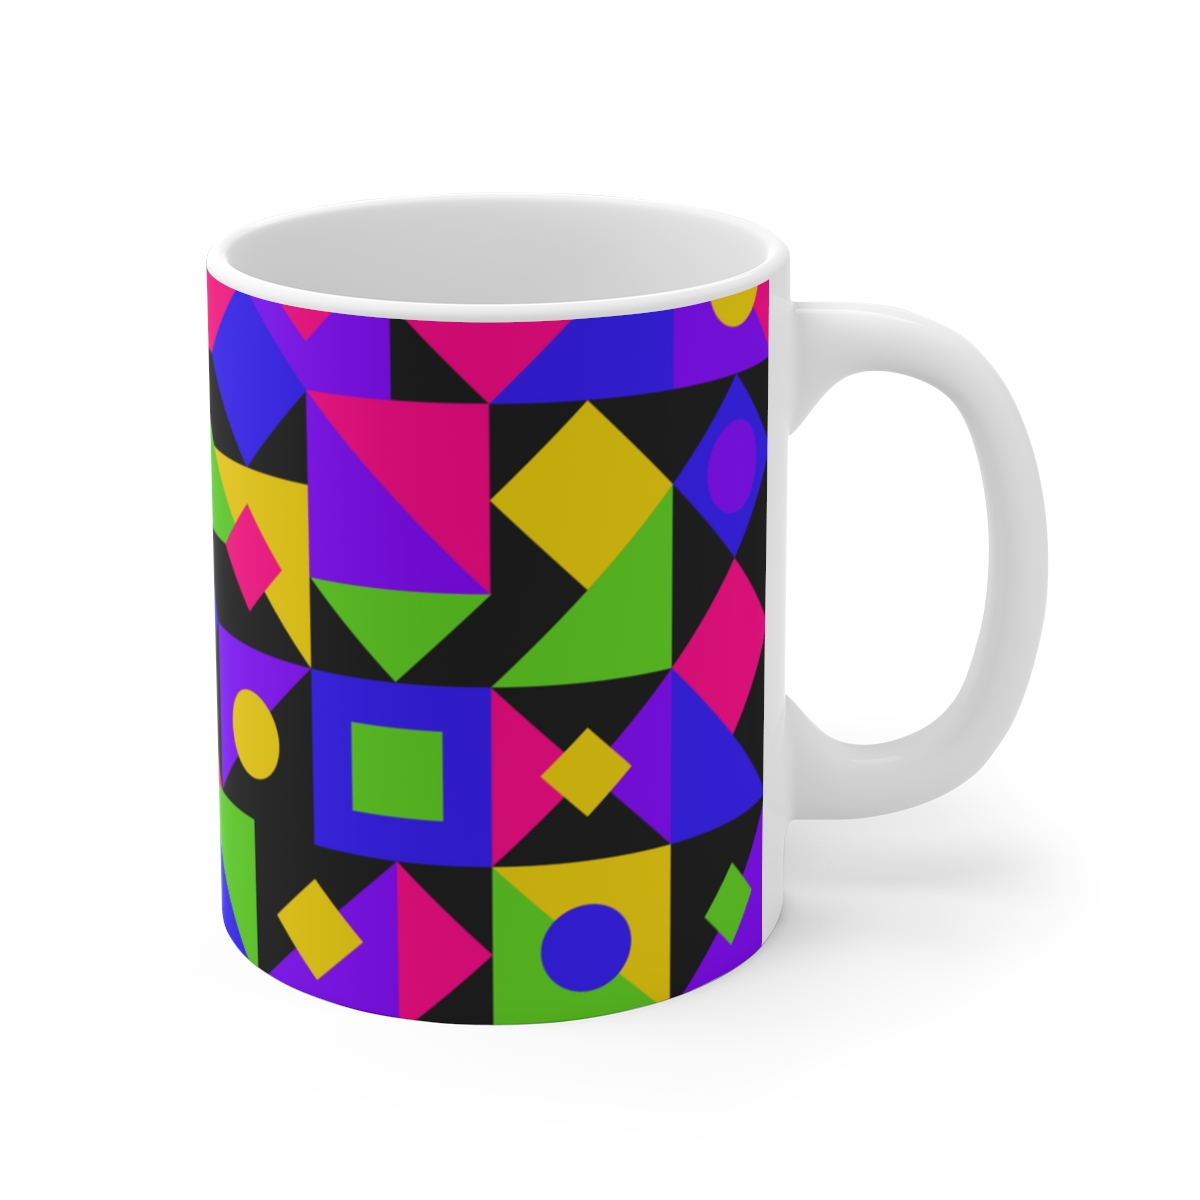 enjoy-your-favorite-drink-in-style-with-our-ceramic-mug-ceramic-mugs-11o (1).jpg